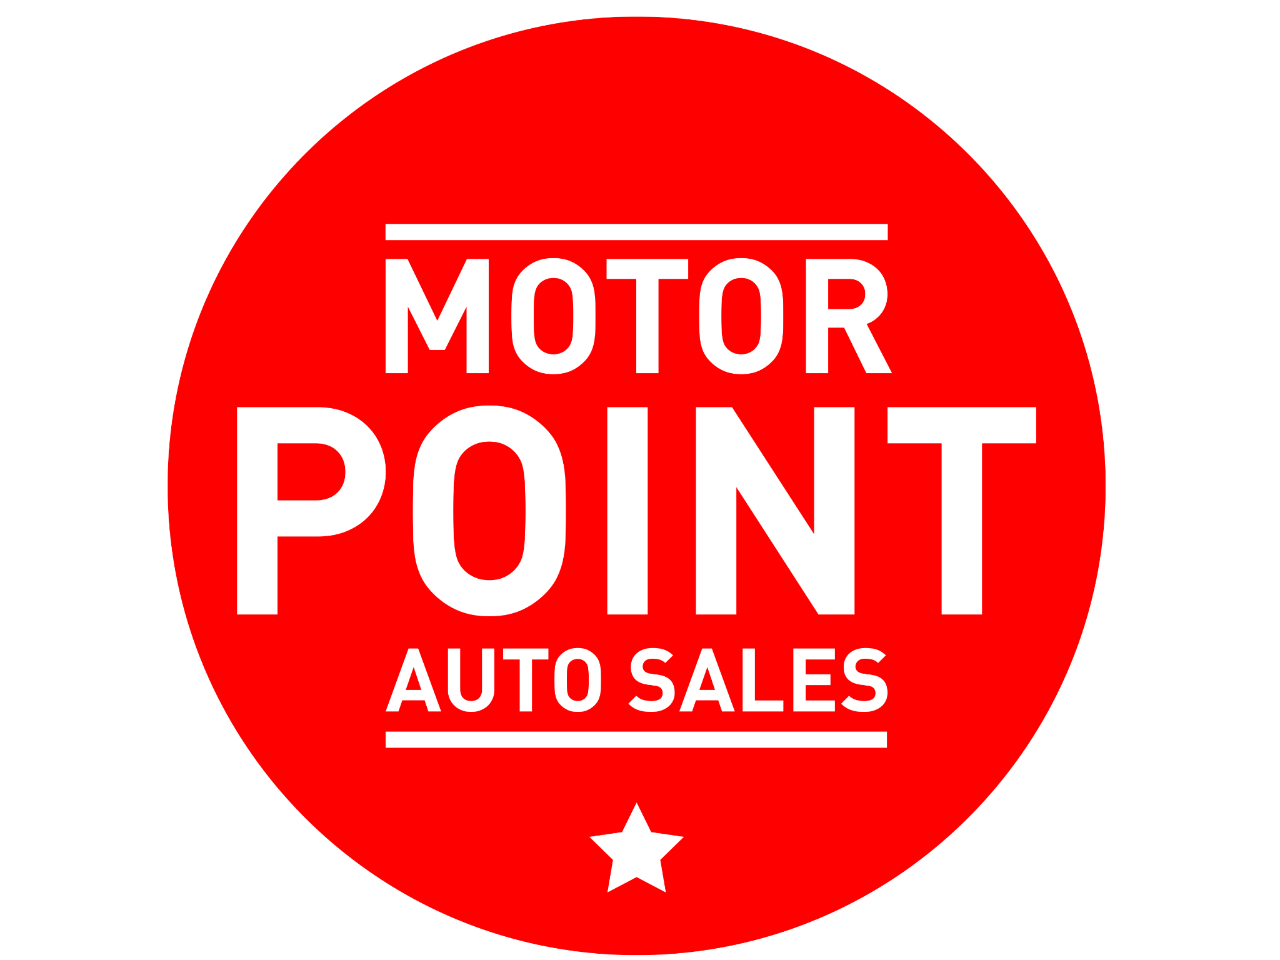 Motor Point Auto Sales